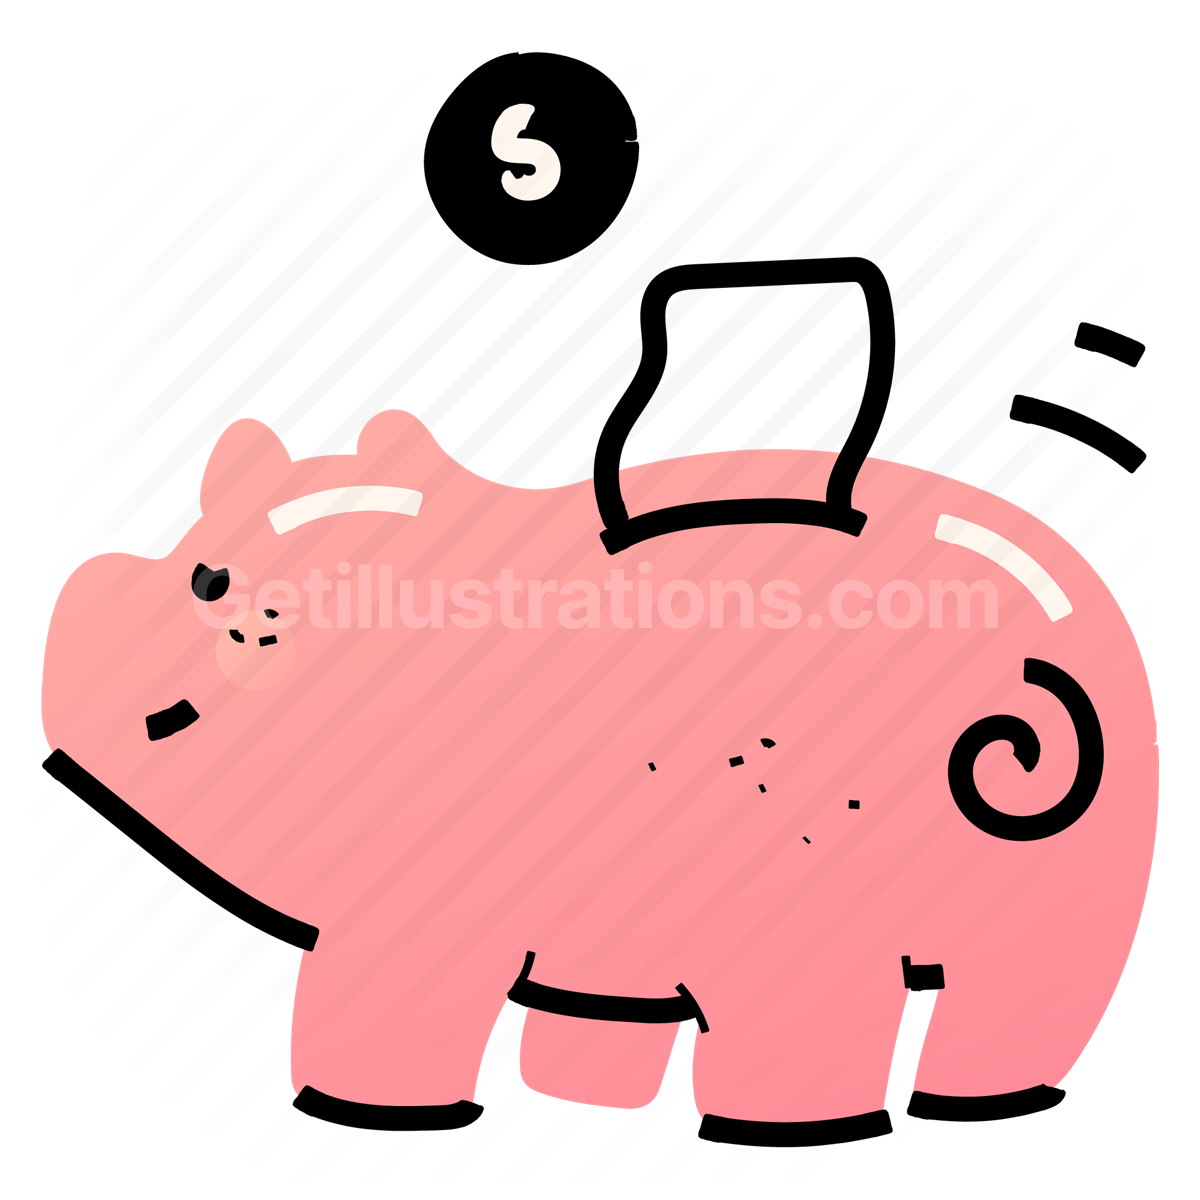 savings, backup, last resort, piggy bank, banking